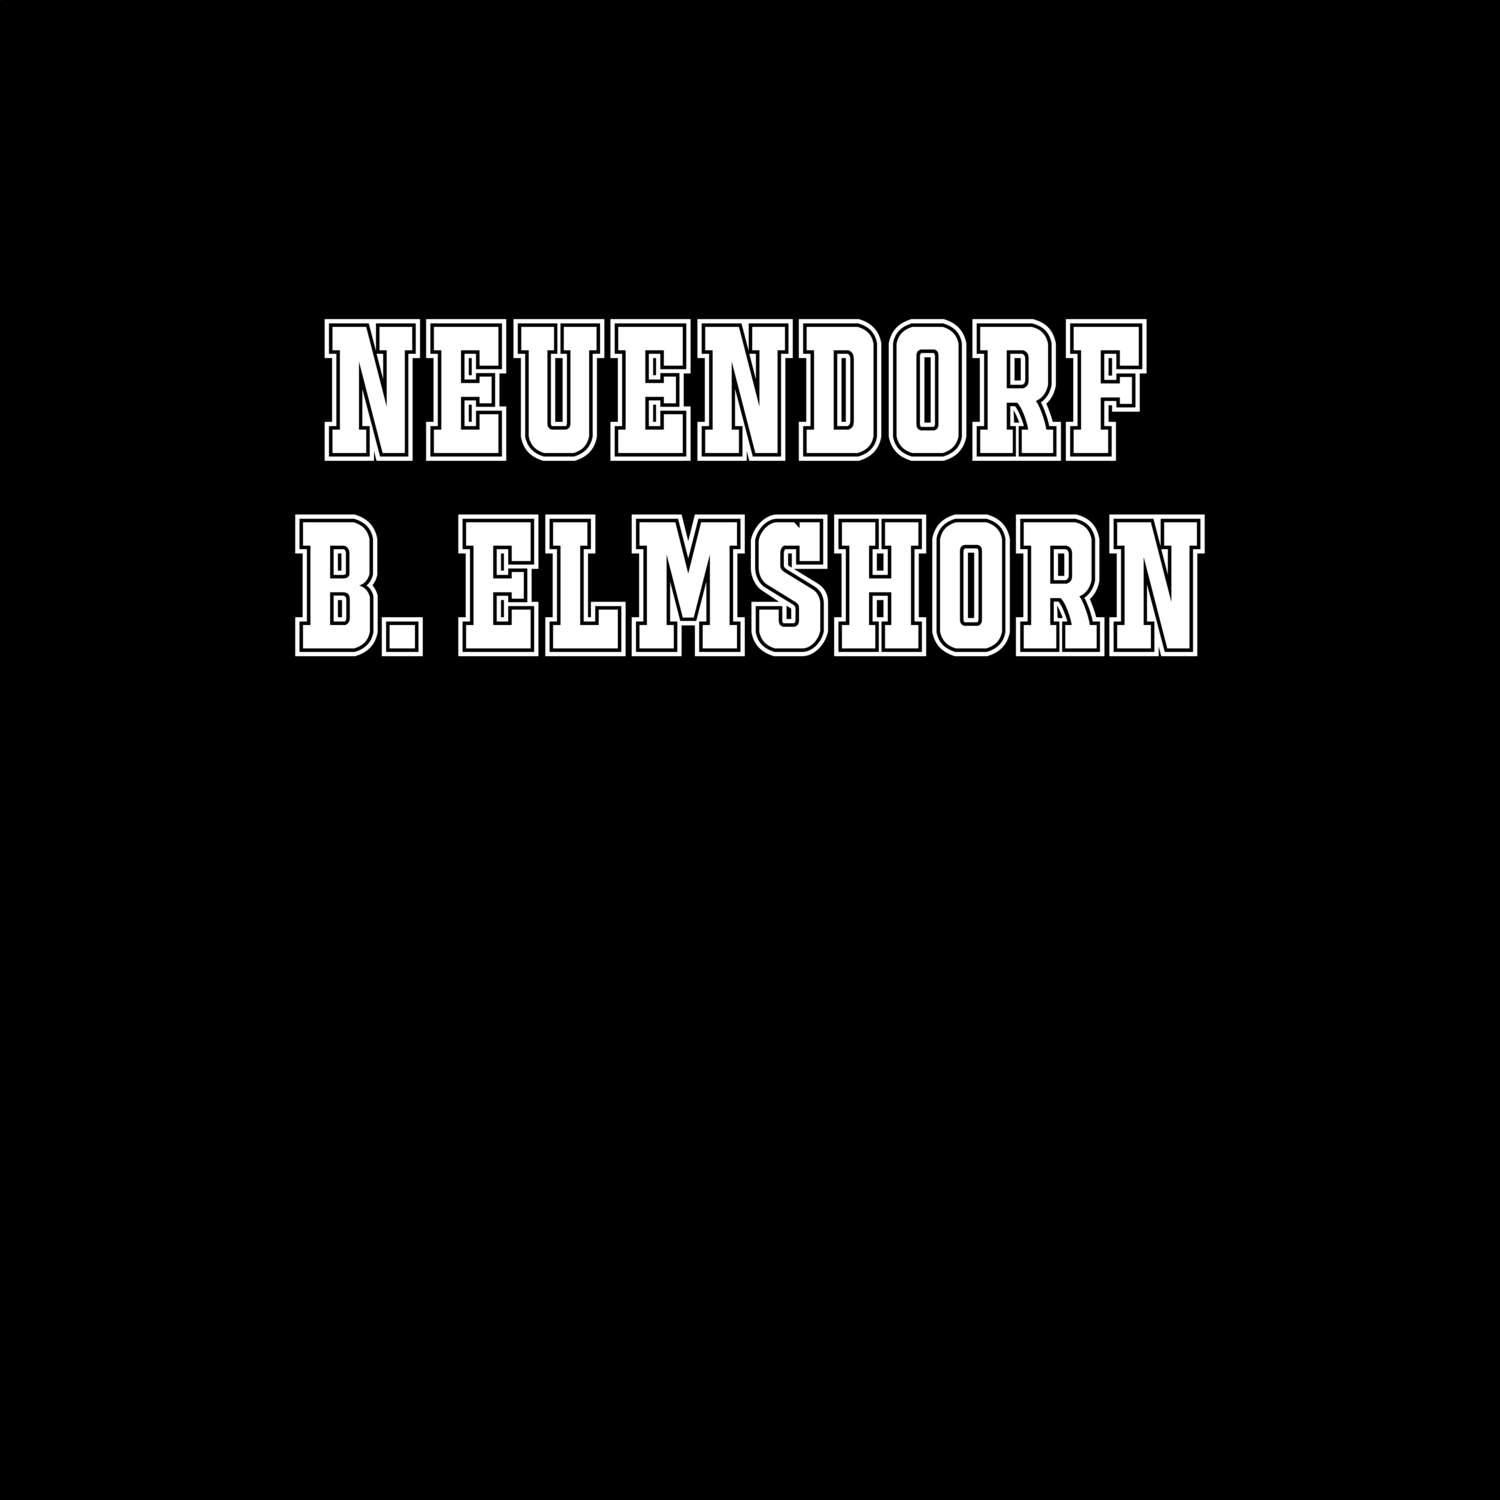 Neuendorf b. Elmshorn T-Shirt »Classic«